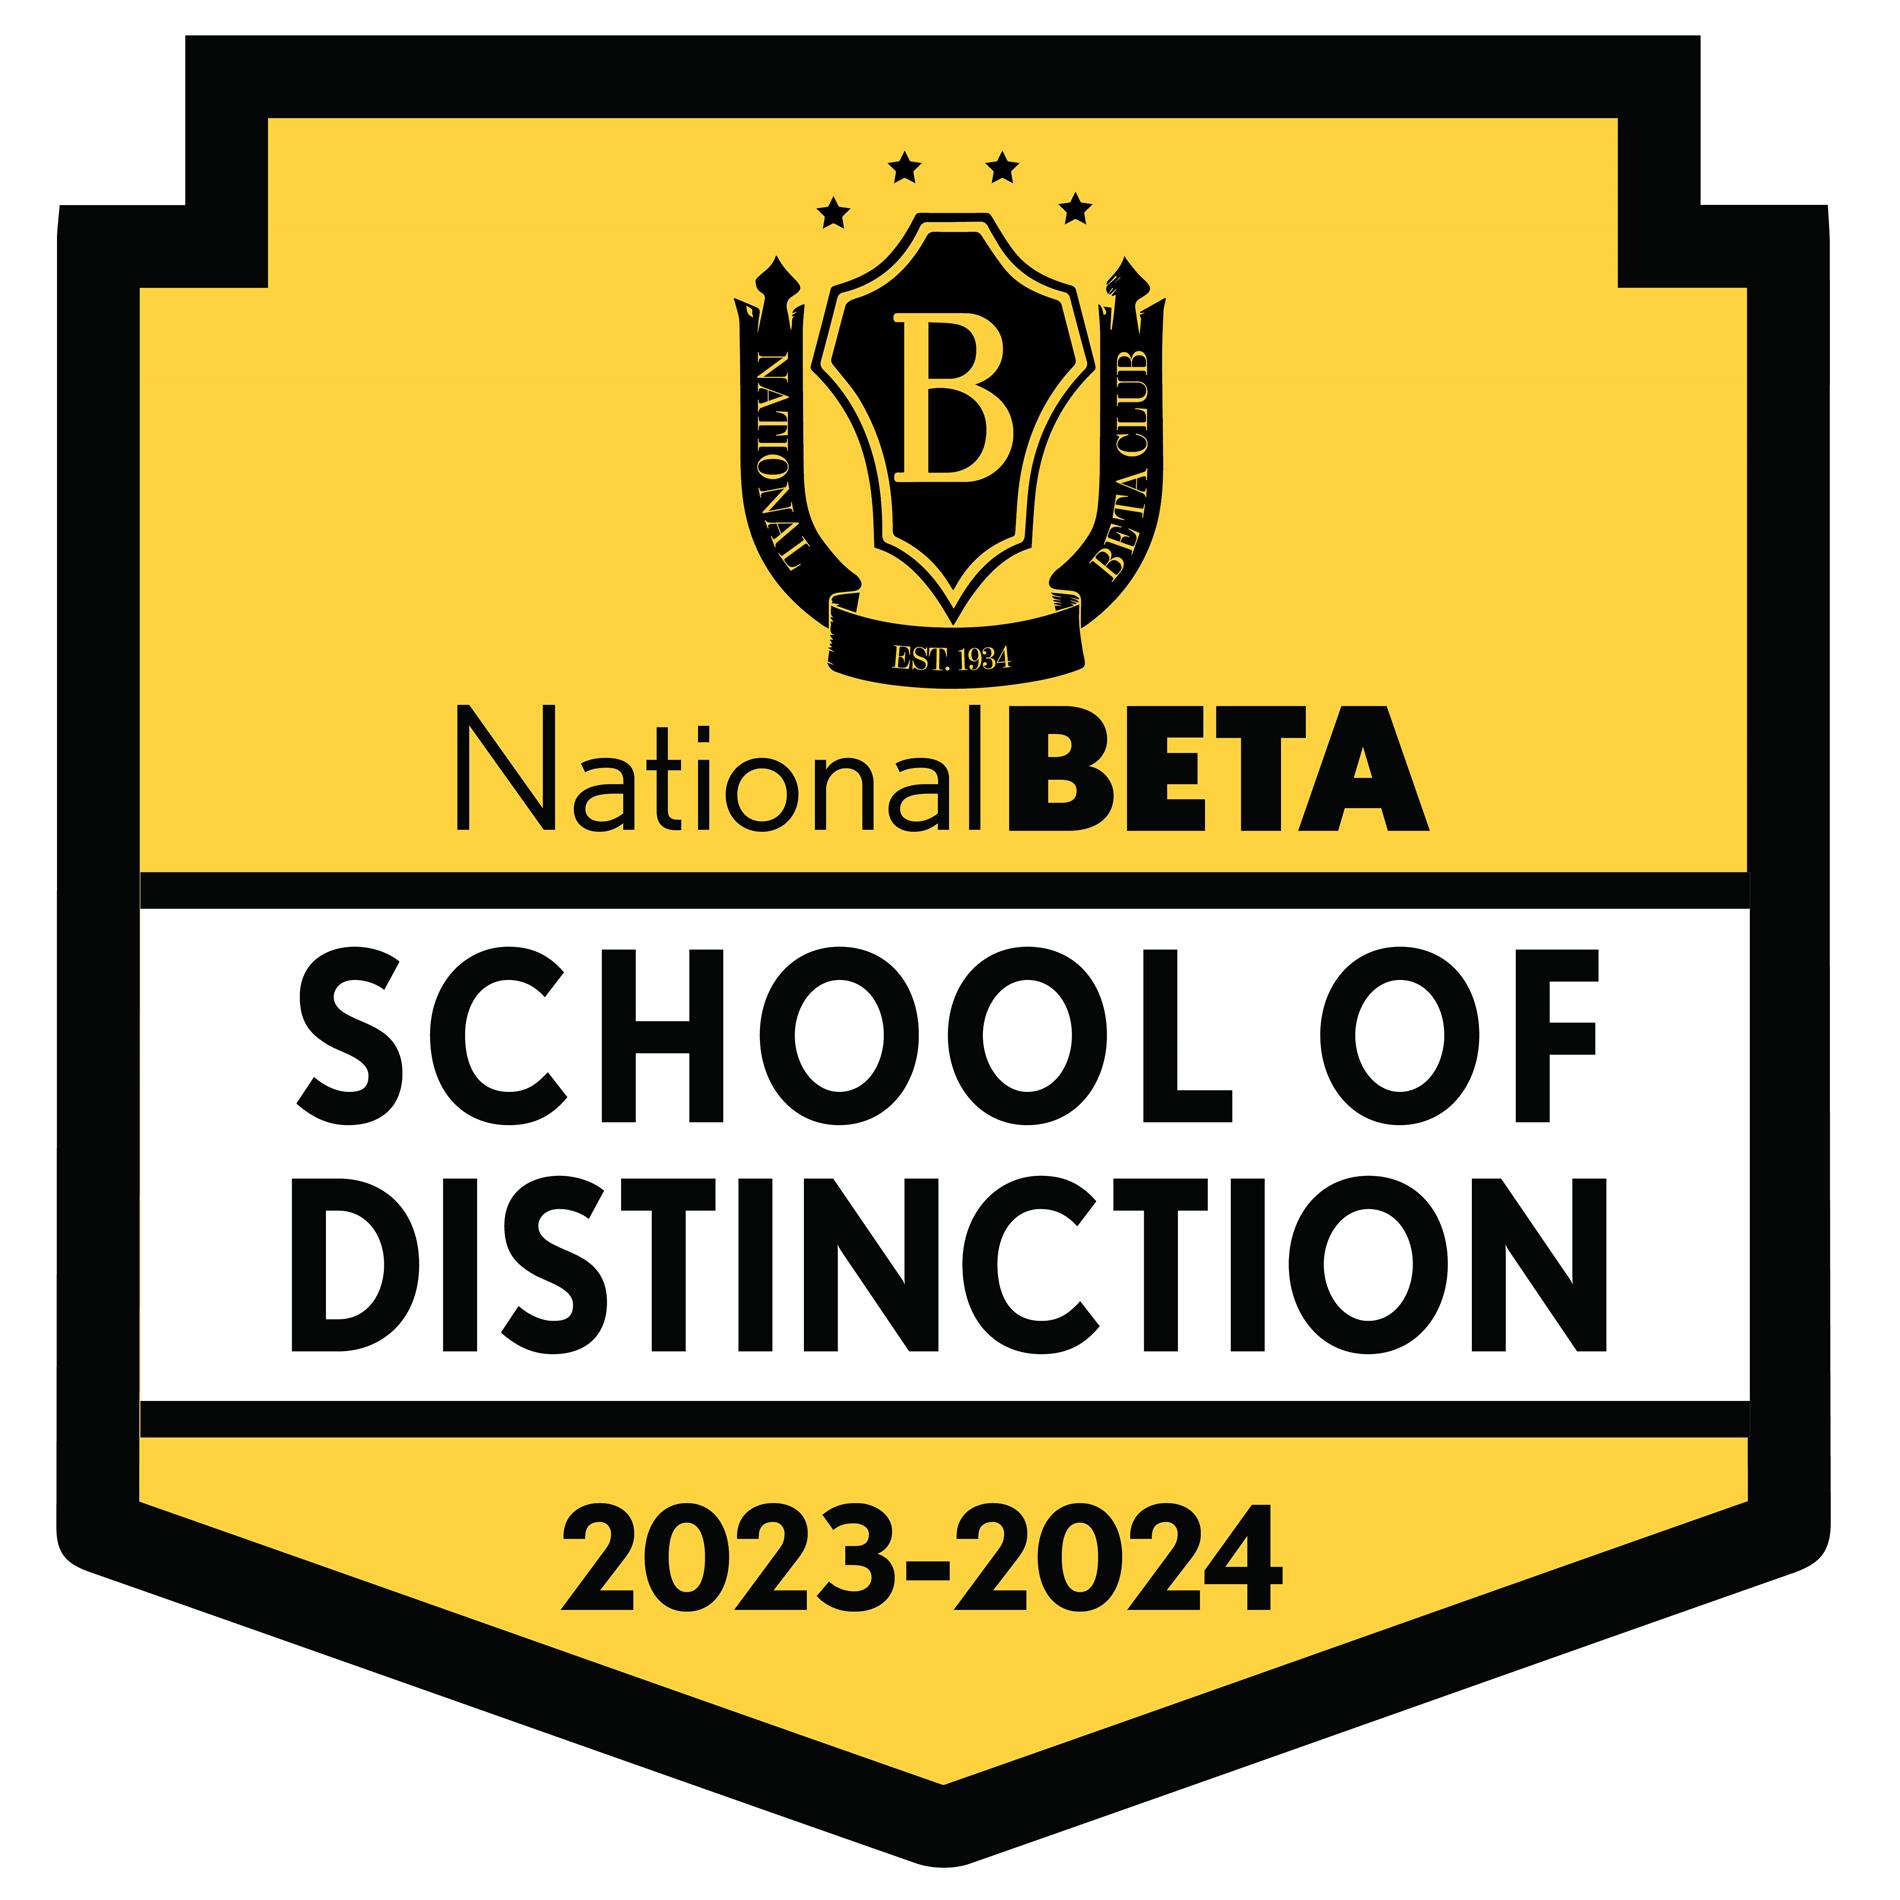 National BETA School of Distinction 2023 2024